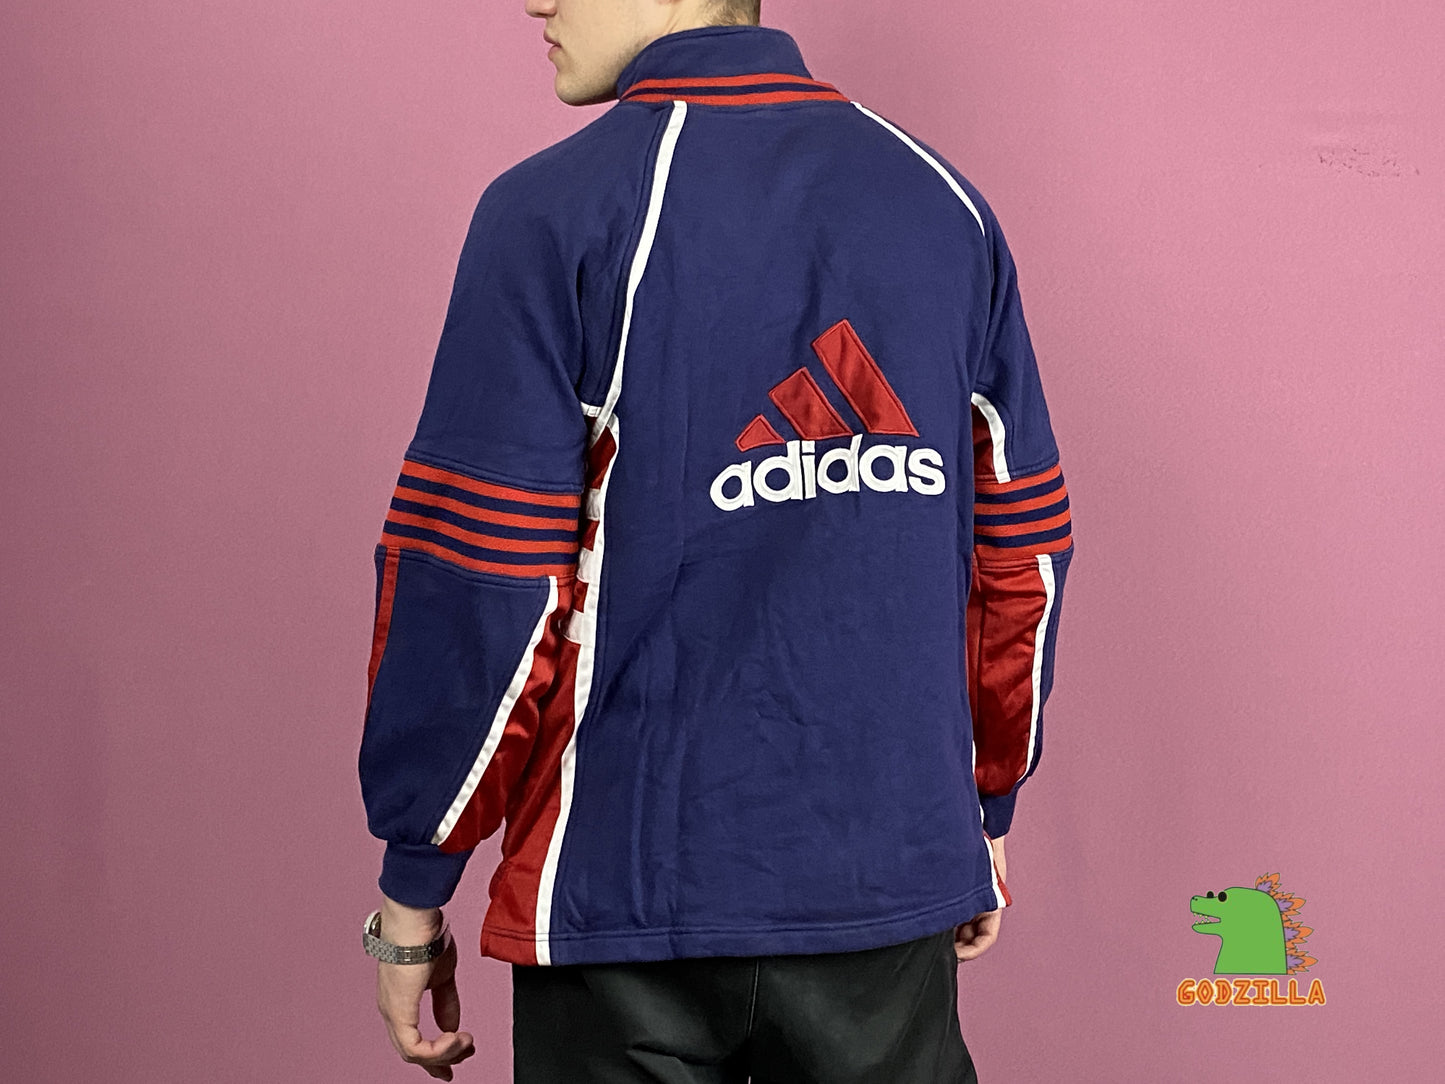 90s Adidas Vintage Men's Track Jacket - Medium Navy Blue Cotton Blend